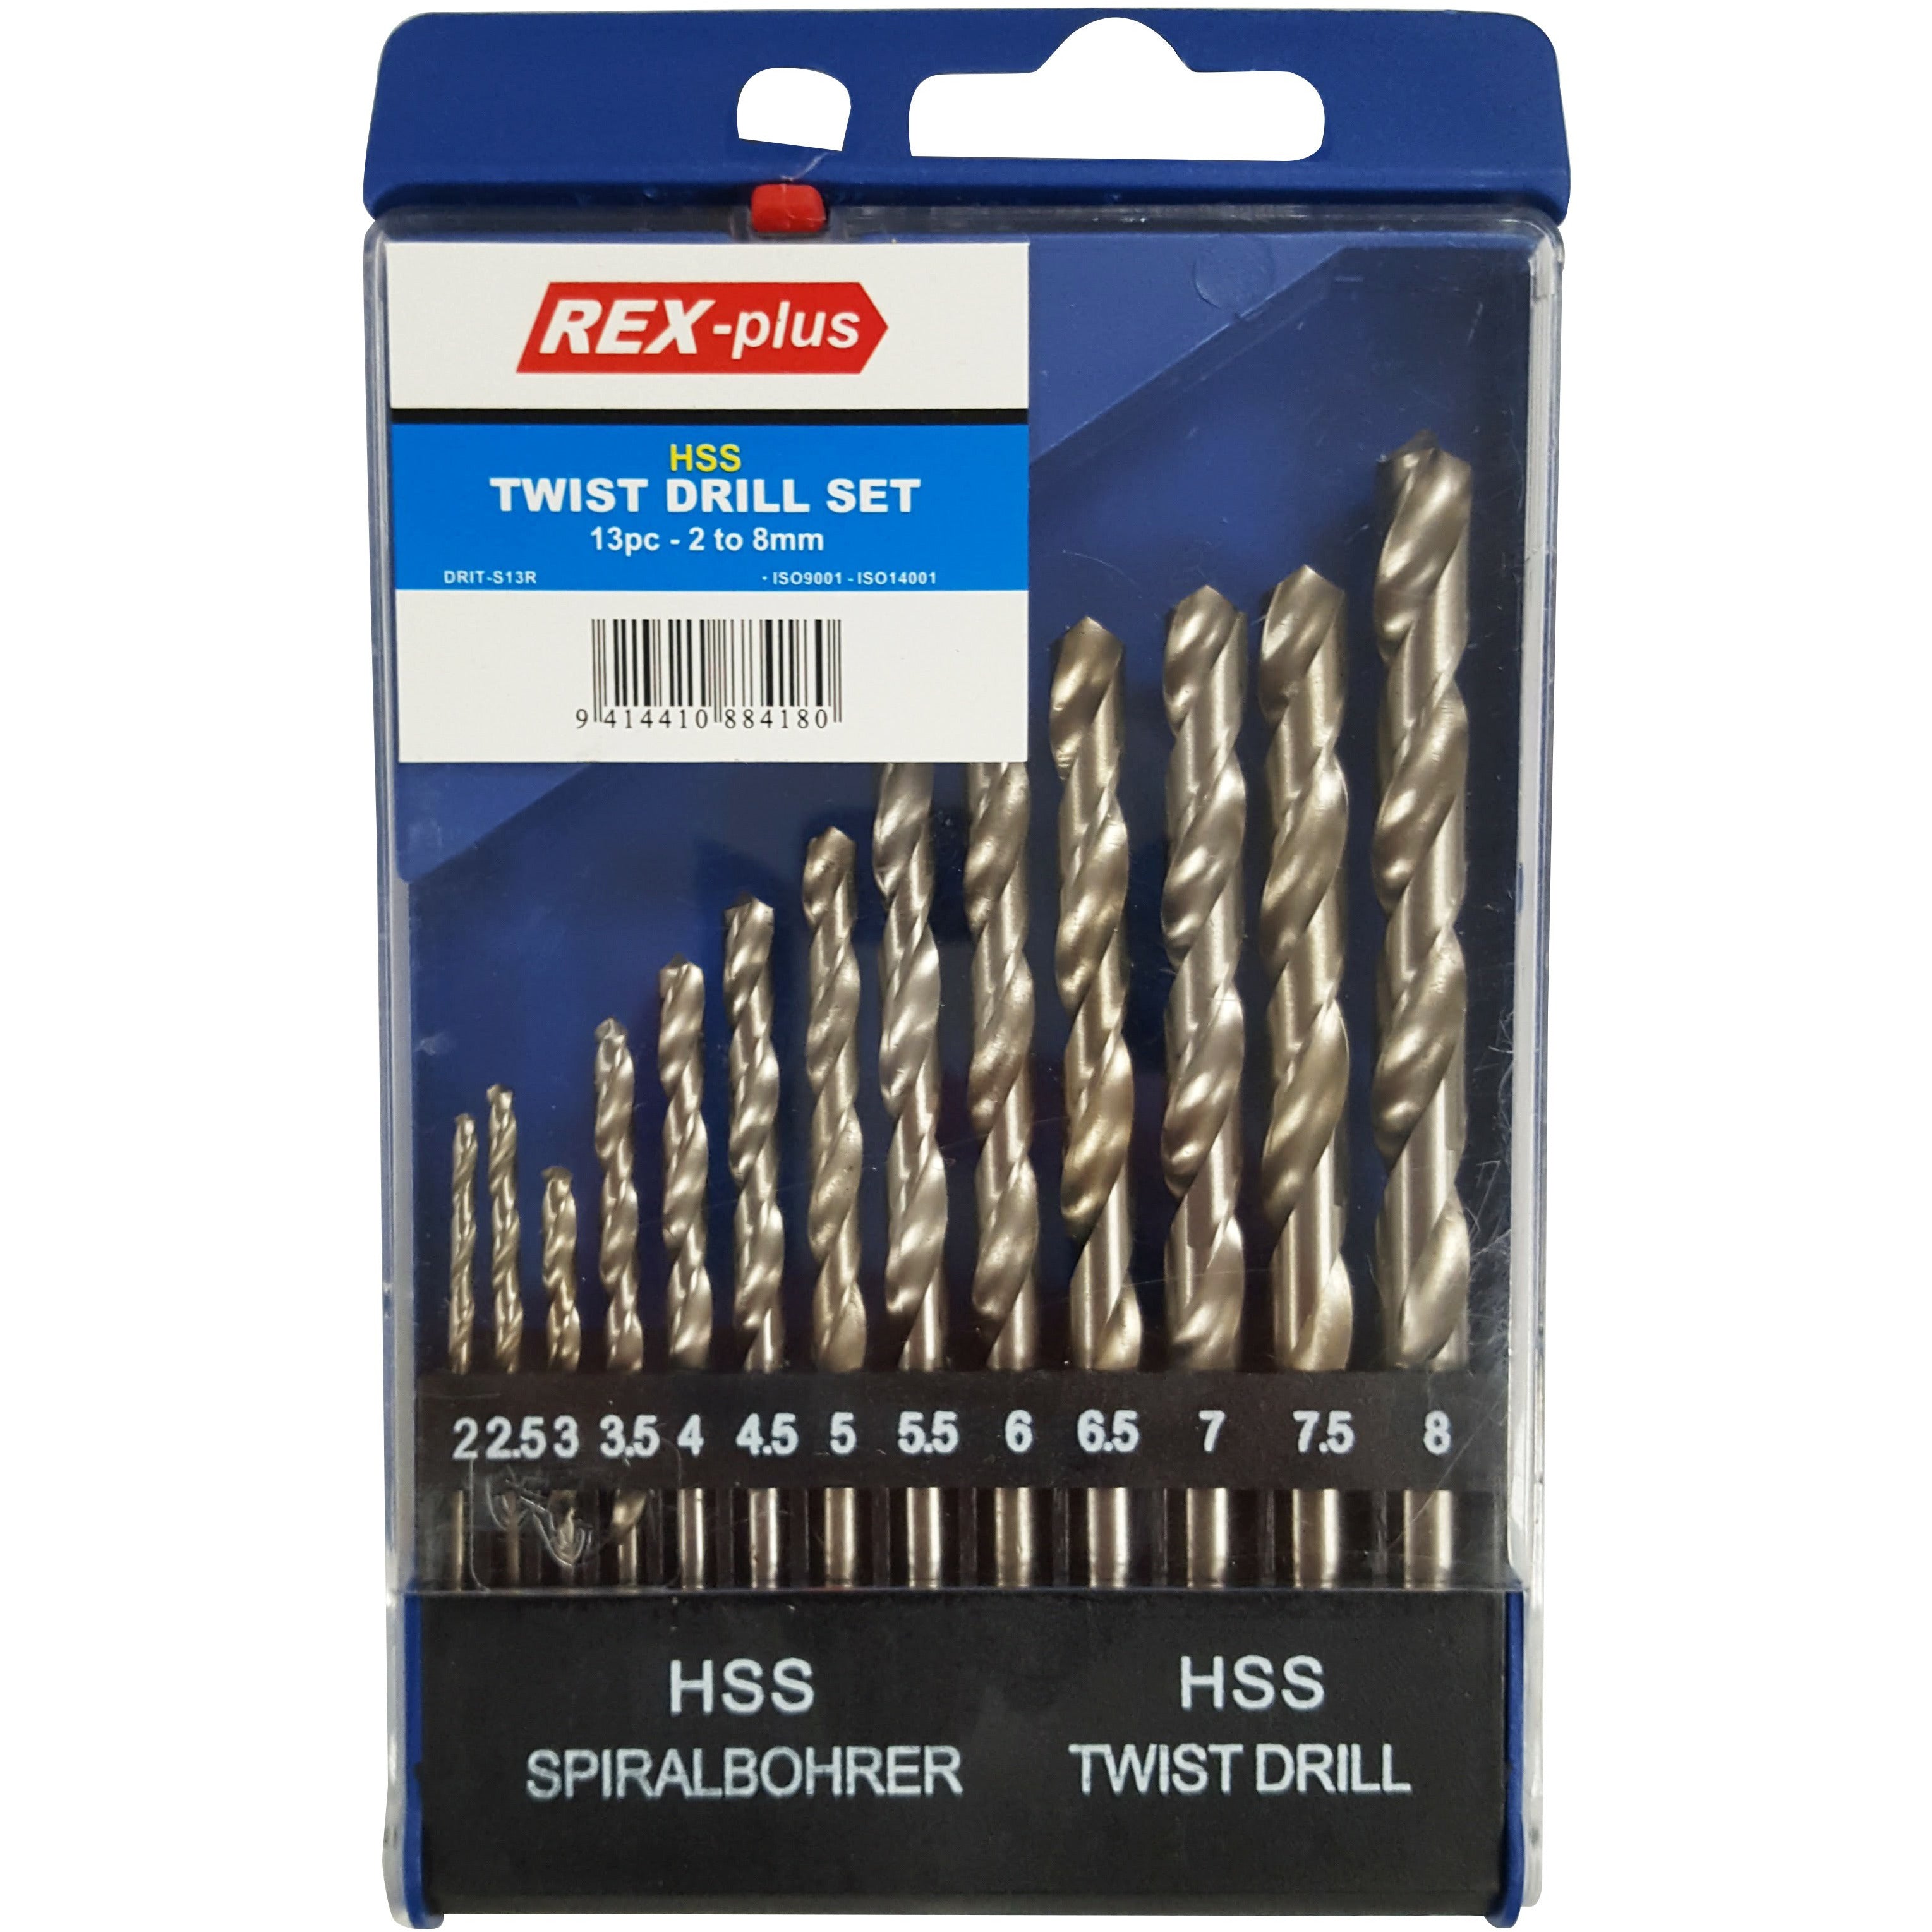 Rex-Plus Twist Drill Set 13pc; 2 - 8mm-Power Tool Accessories-Tool Factory